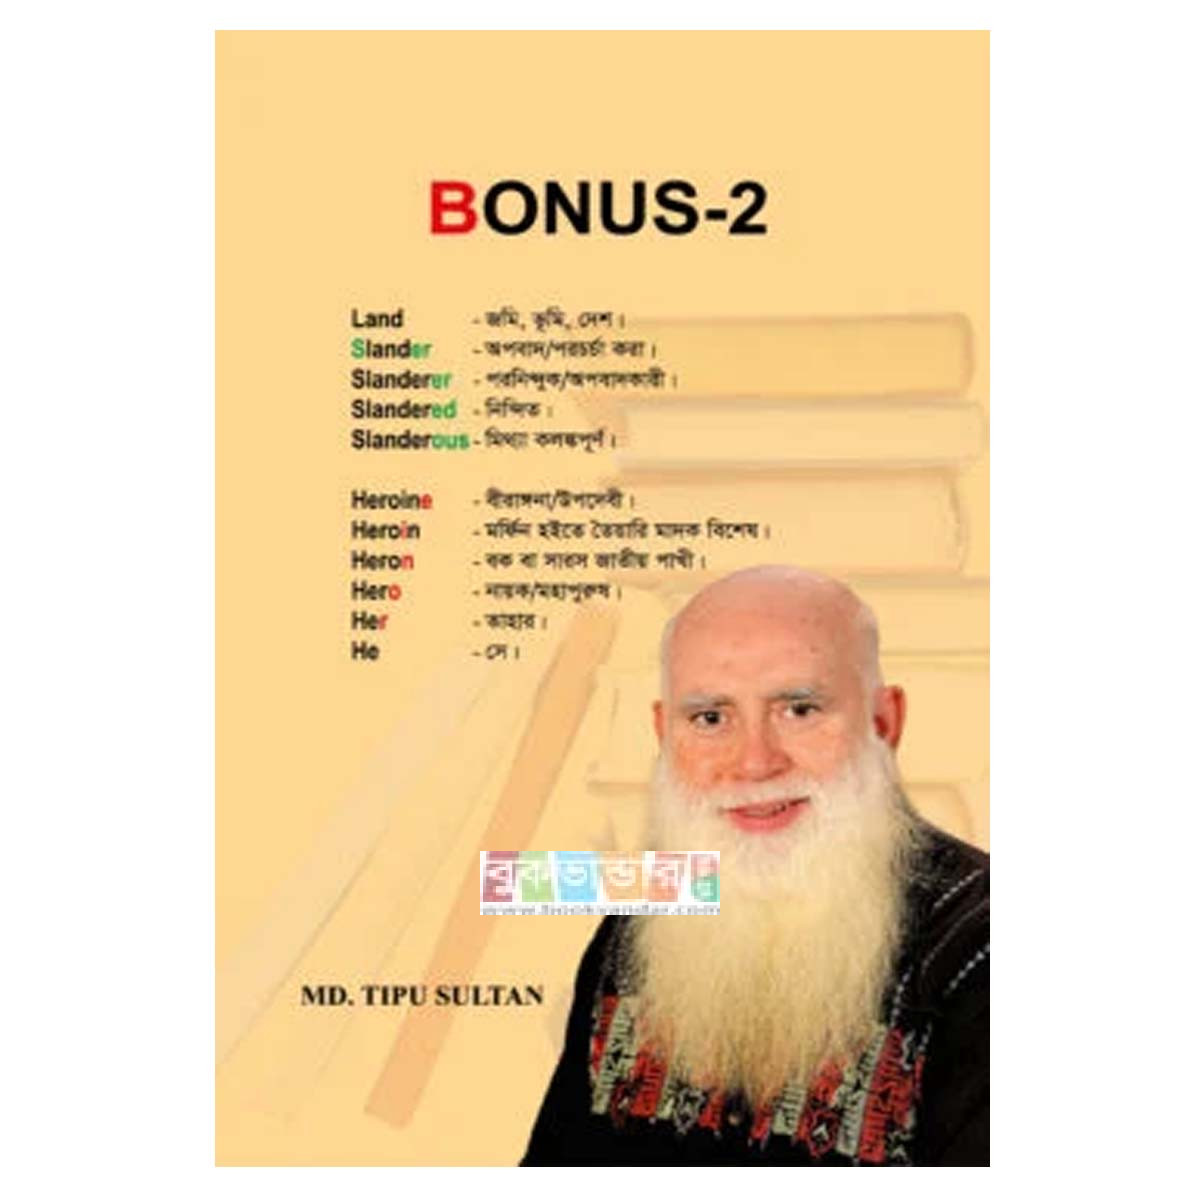 Bonus-2 (Paperback) by Md. Tipu Sultan